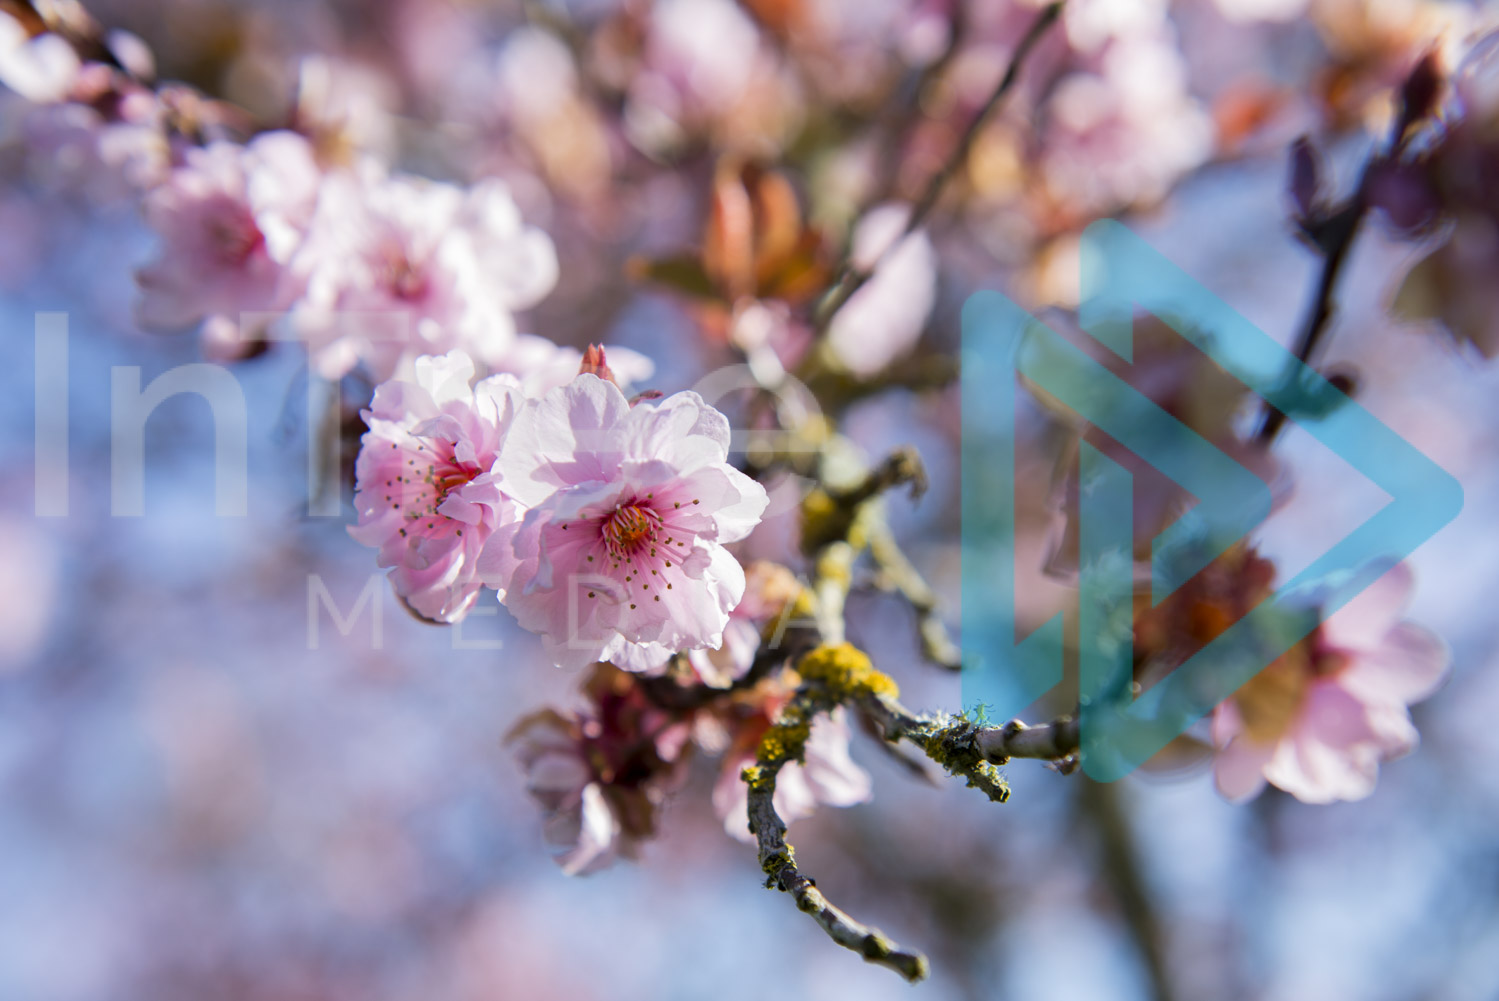 Vibrant pink cherry blossom InTree arborist image 001-21-5402